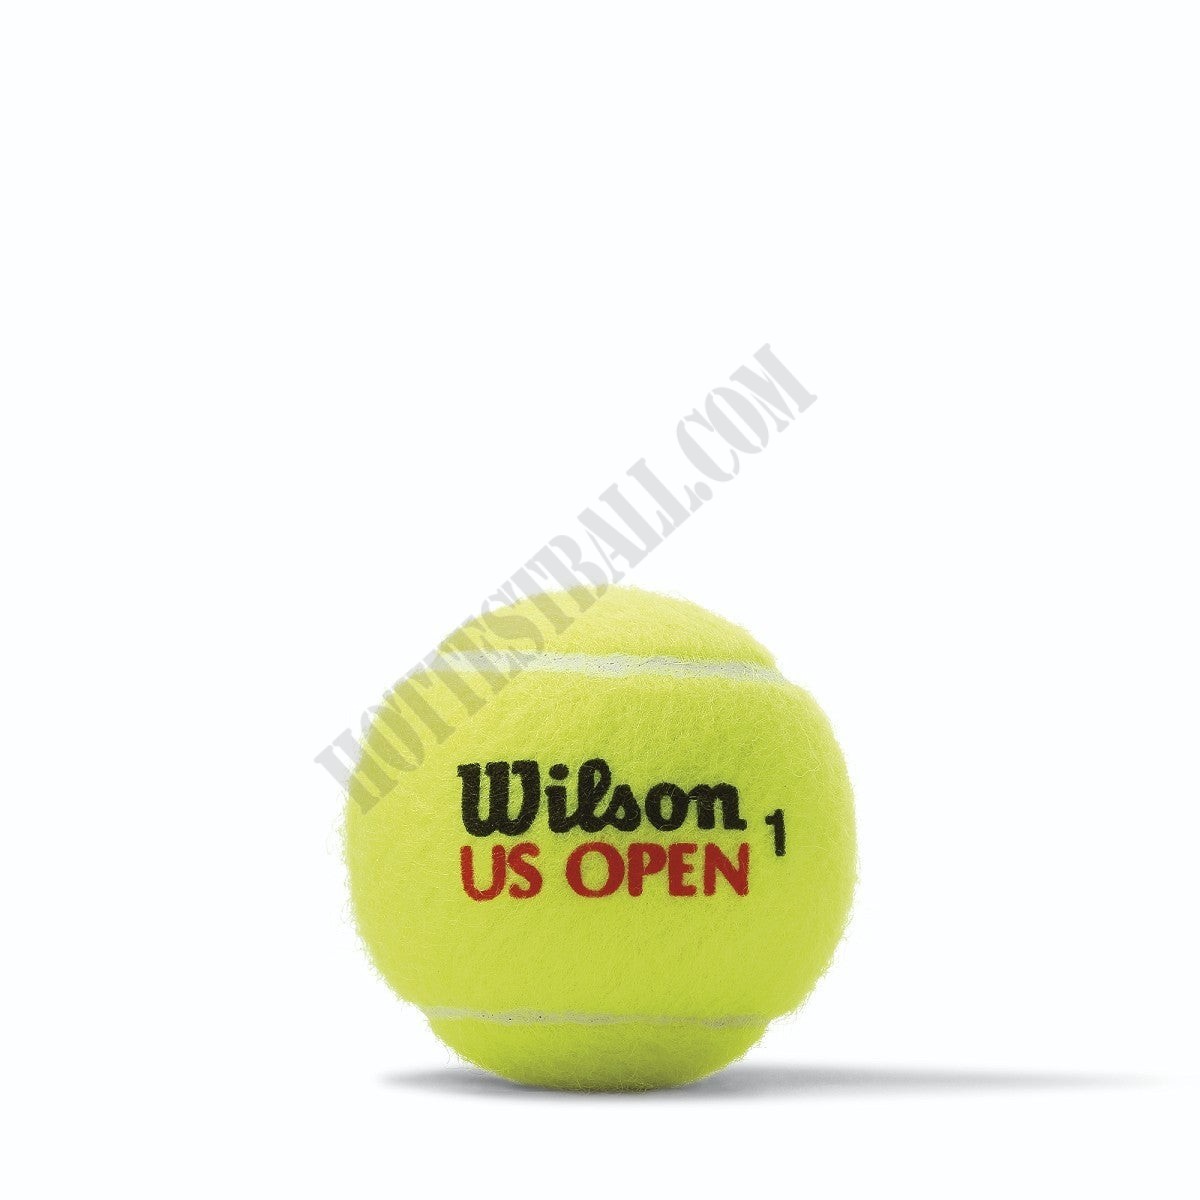 US Open Extra Duty Tennis Balls - 36 Balls Case - Wilson Discount Store - -2